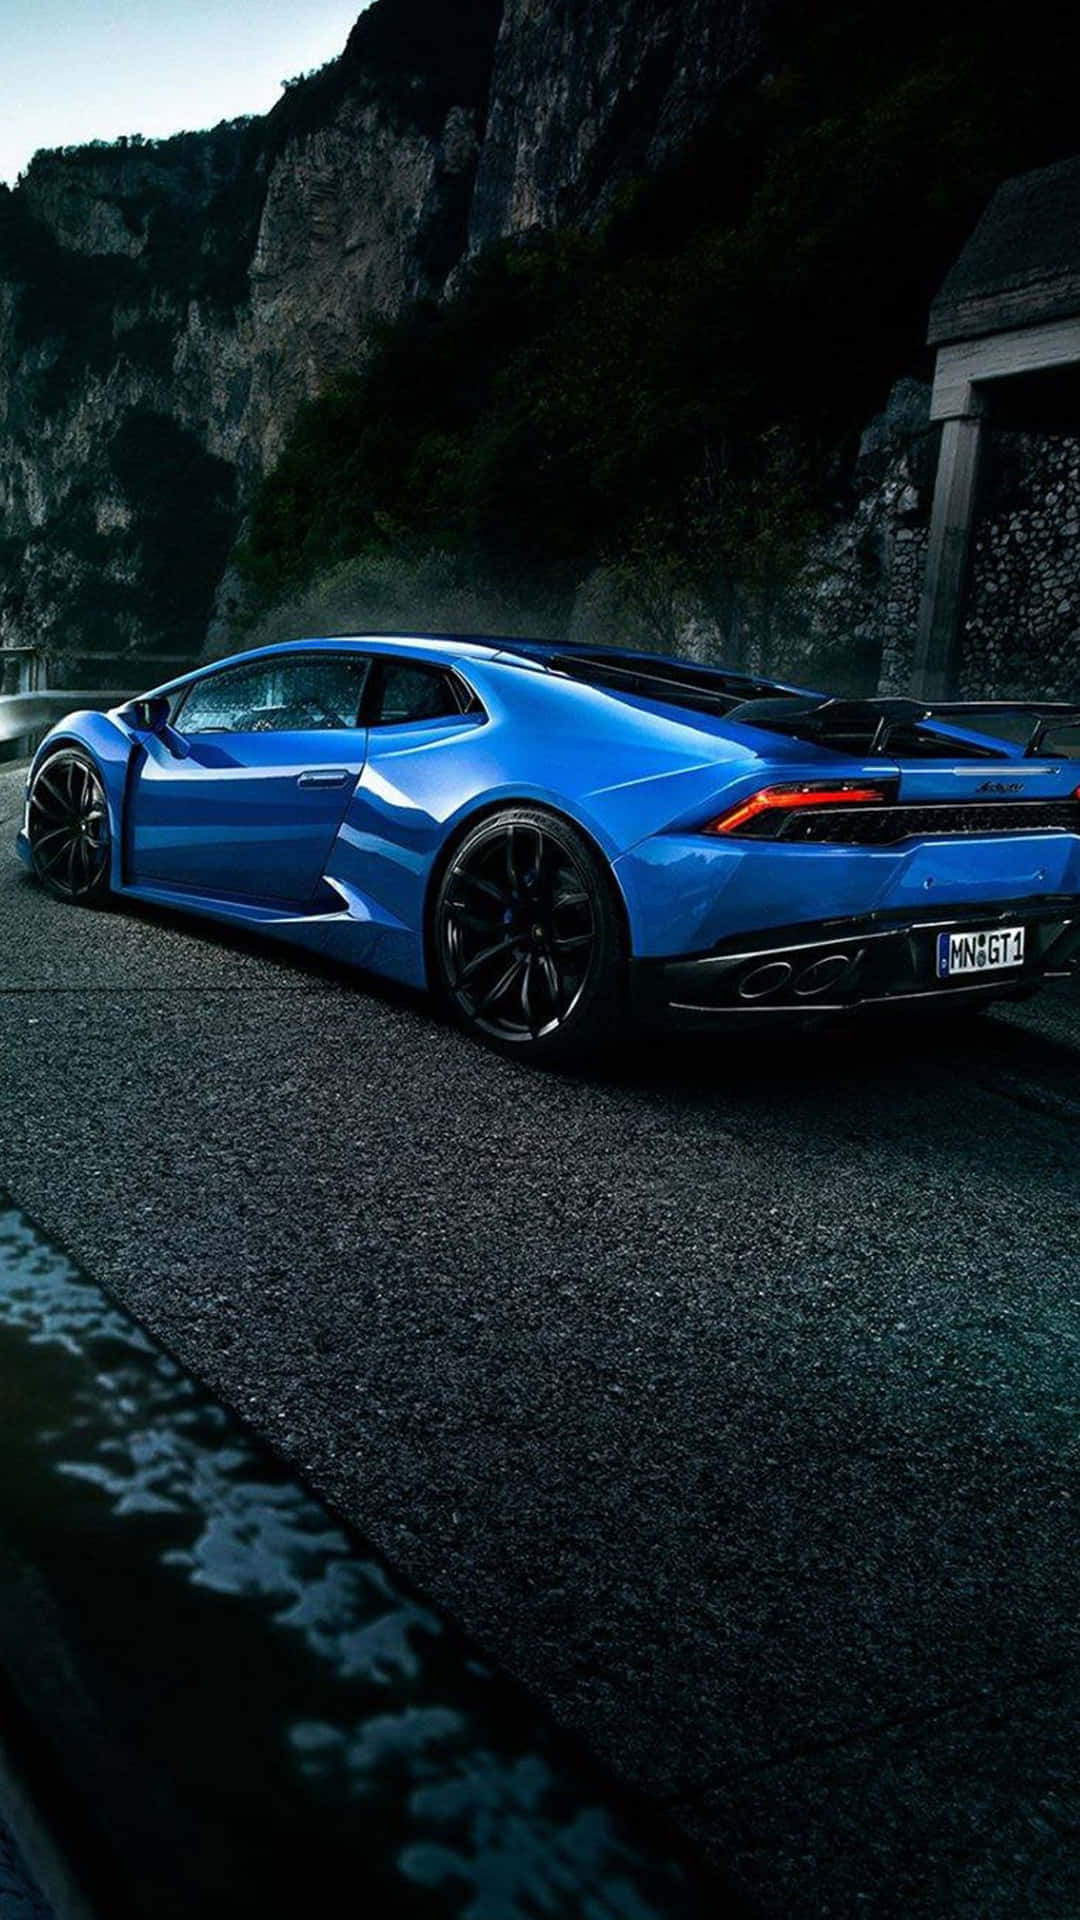 Cool Blue Lamborghini Car Picture